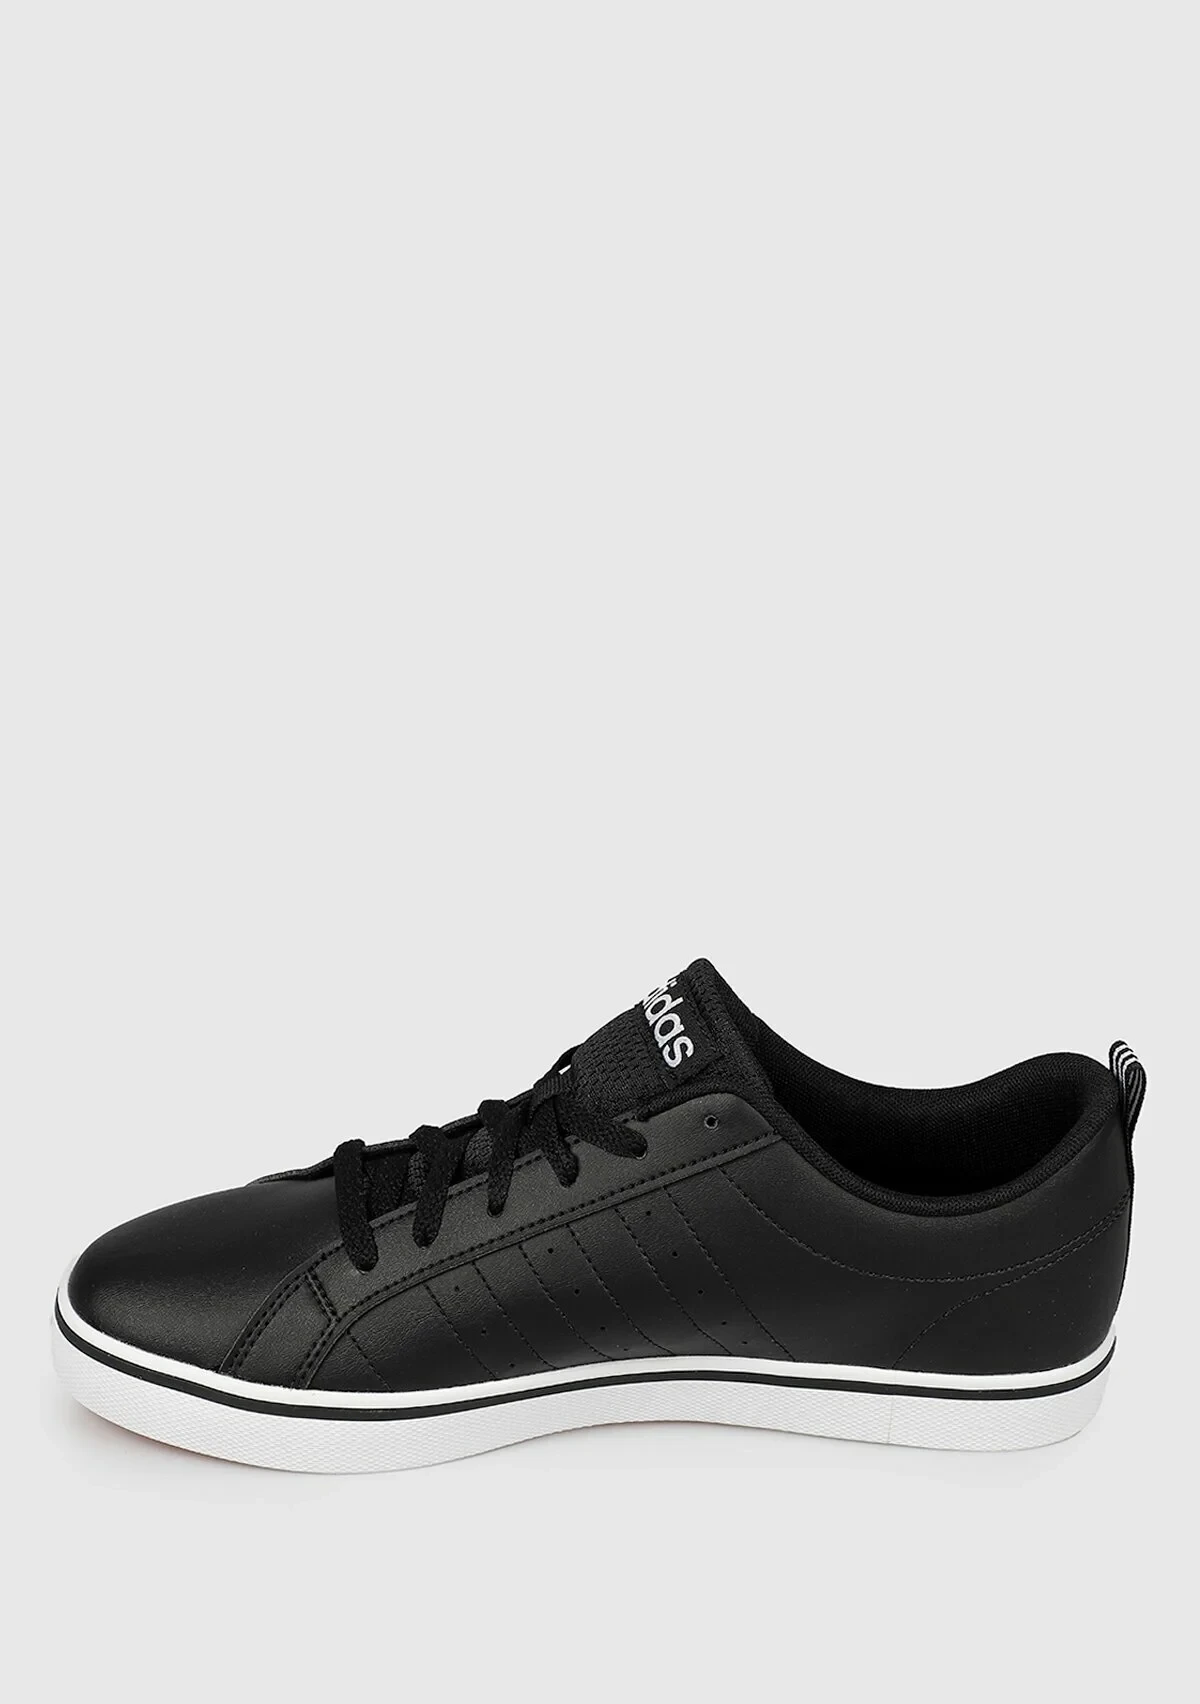 adidas Vs Pace Siyah Erkek Tenis Ayakkabısı